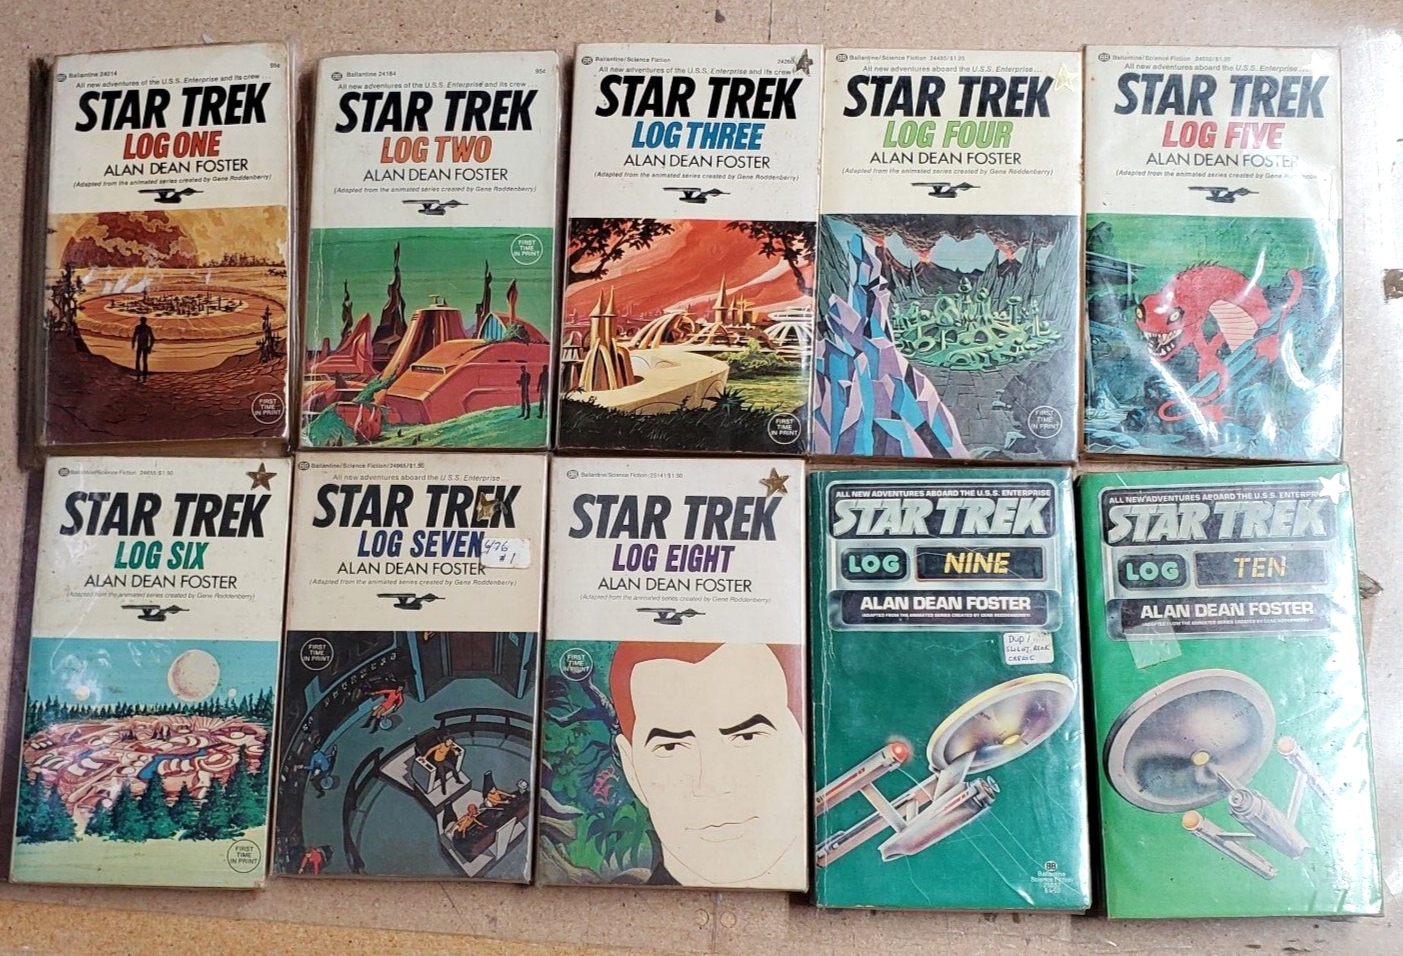 Star Trek book covers, logs 1-10.